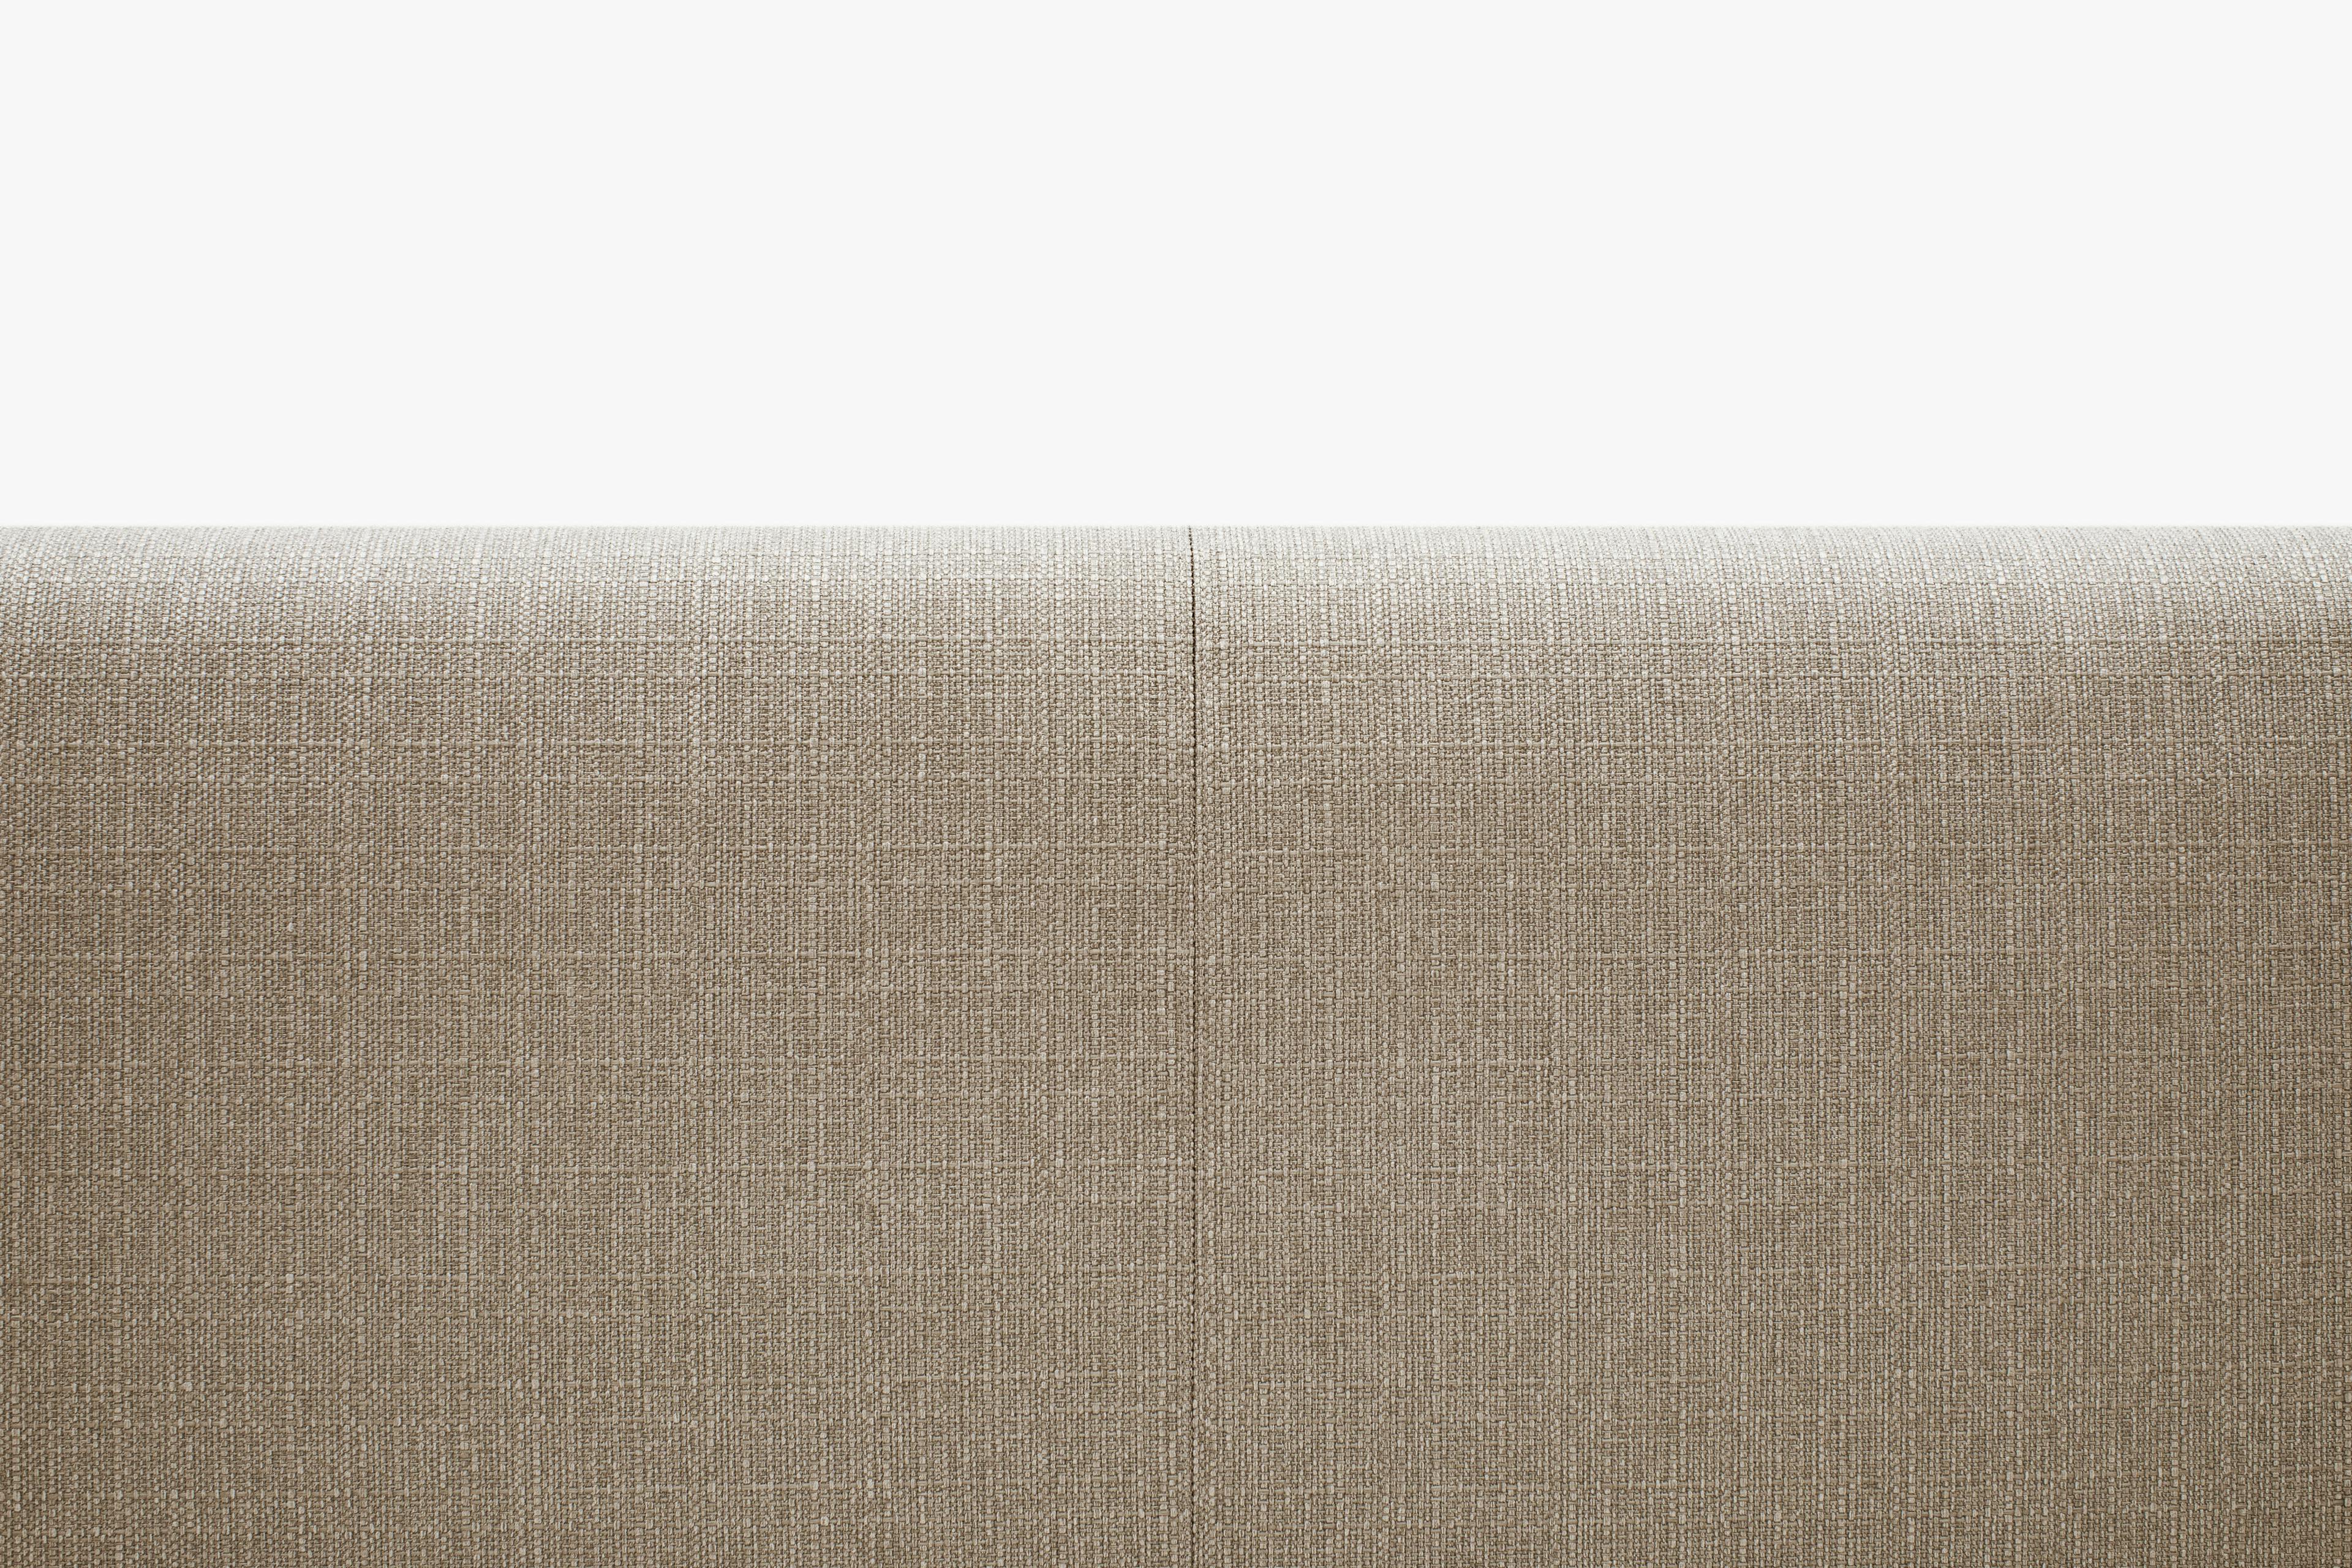 PDP Image: PillowBoard Cover (Linen Weave / Dune) - 3:2 - Detail